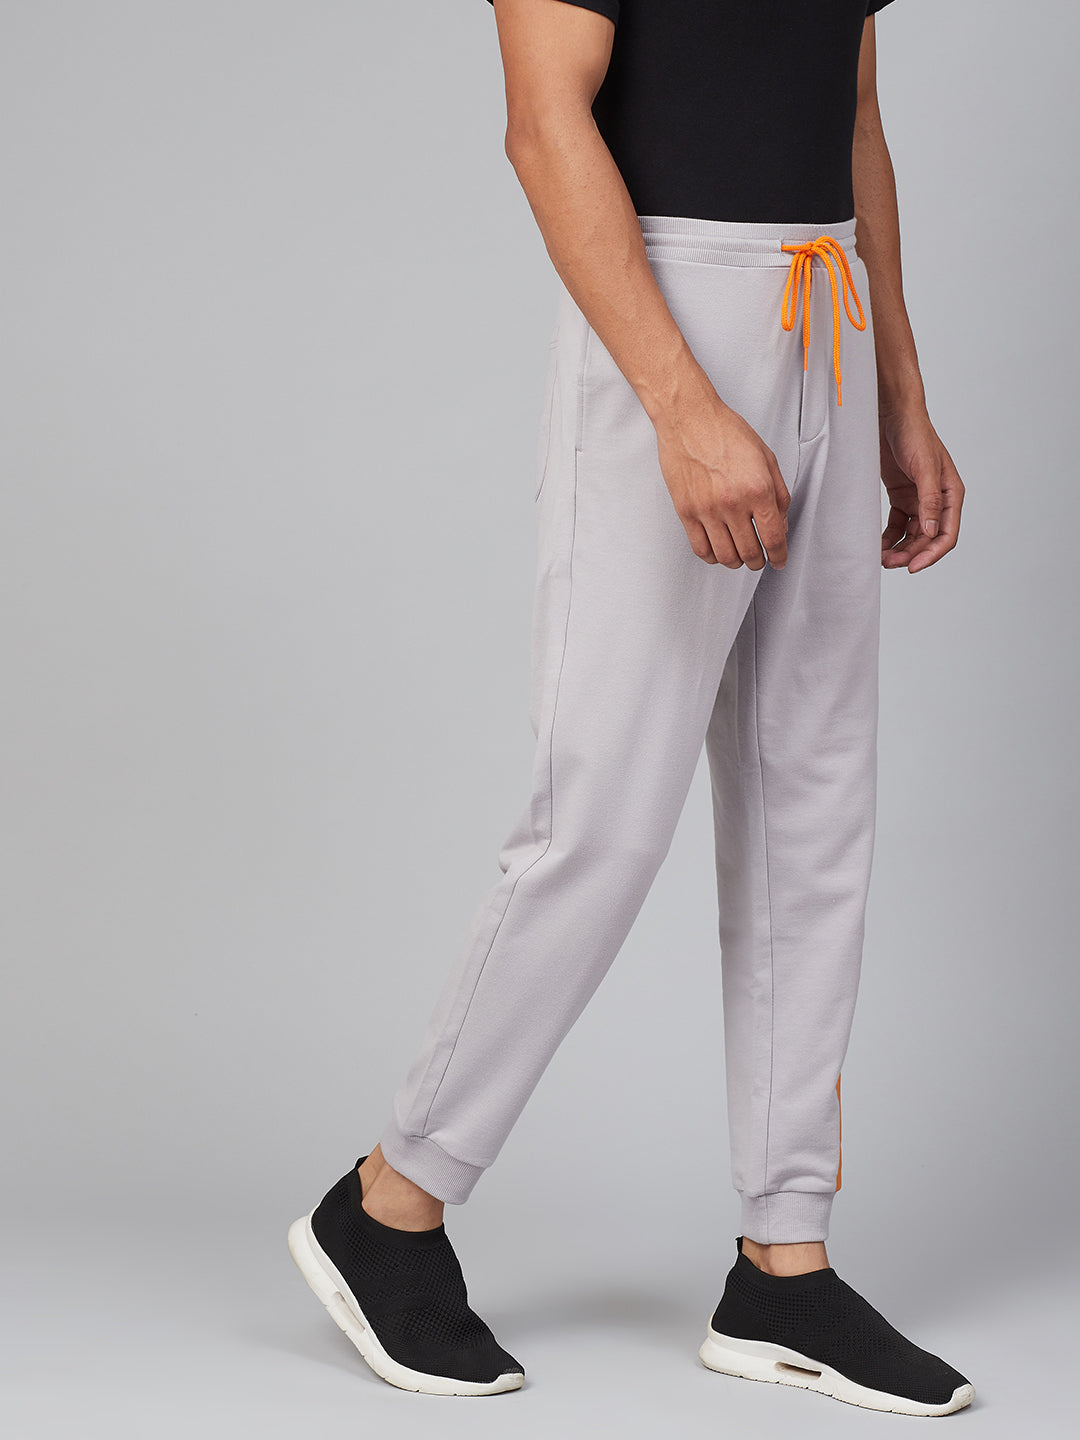 Underjeans By Spykar Grey Cotton Blend Solid Trackpants-Trackpants-UnderJeans By Spykar